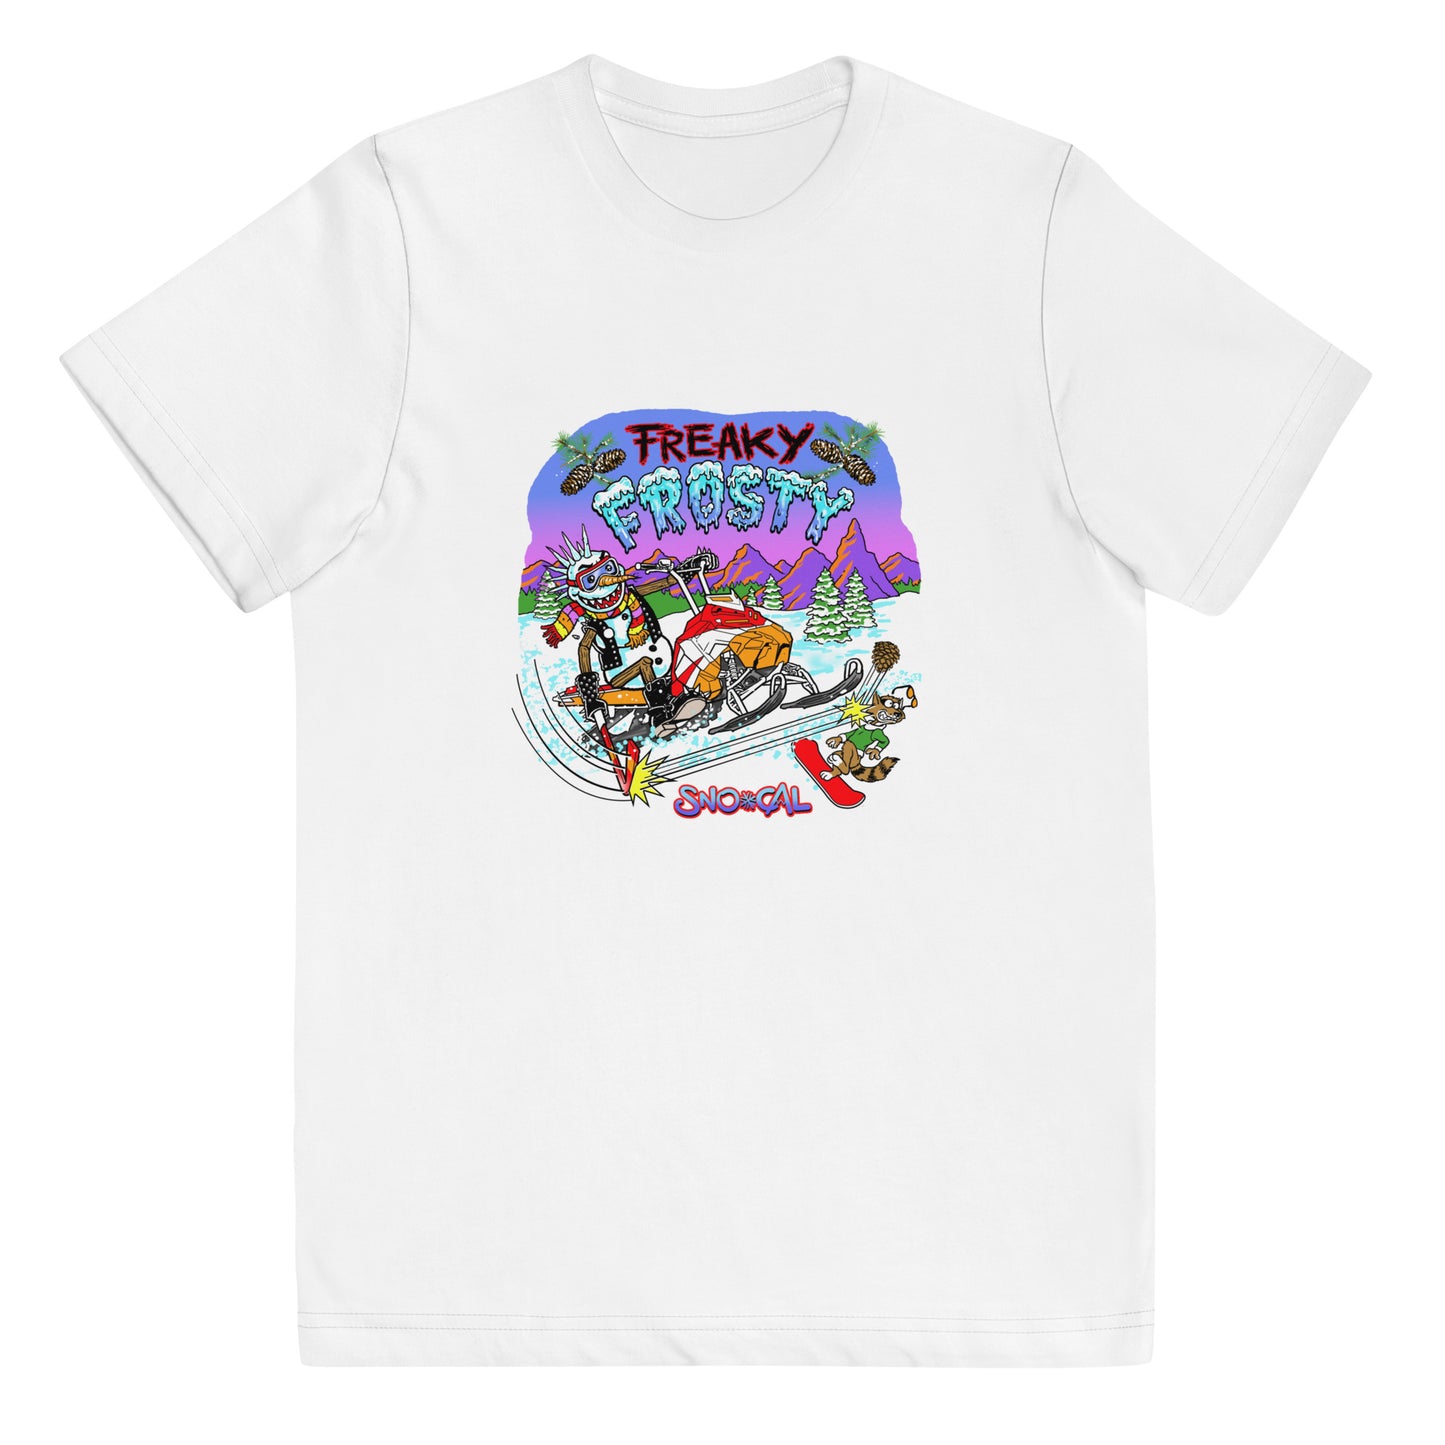 Freaky Frosty Kids Size Shirt